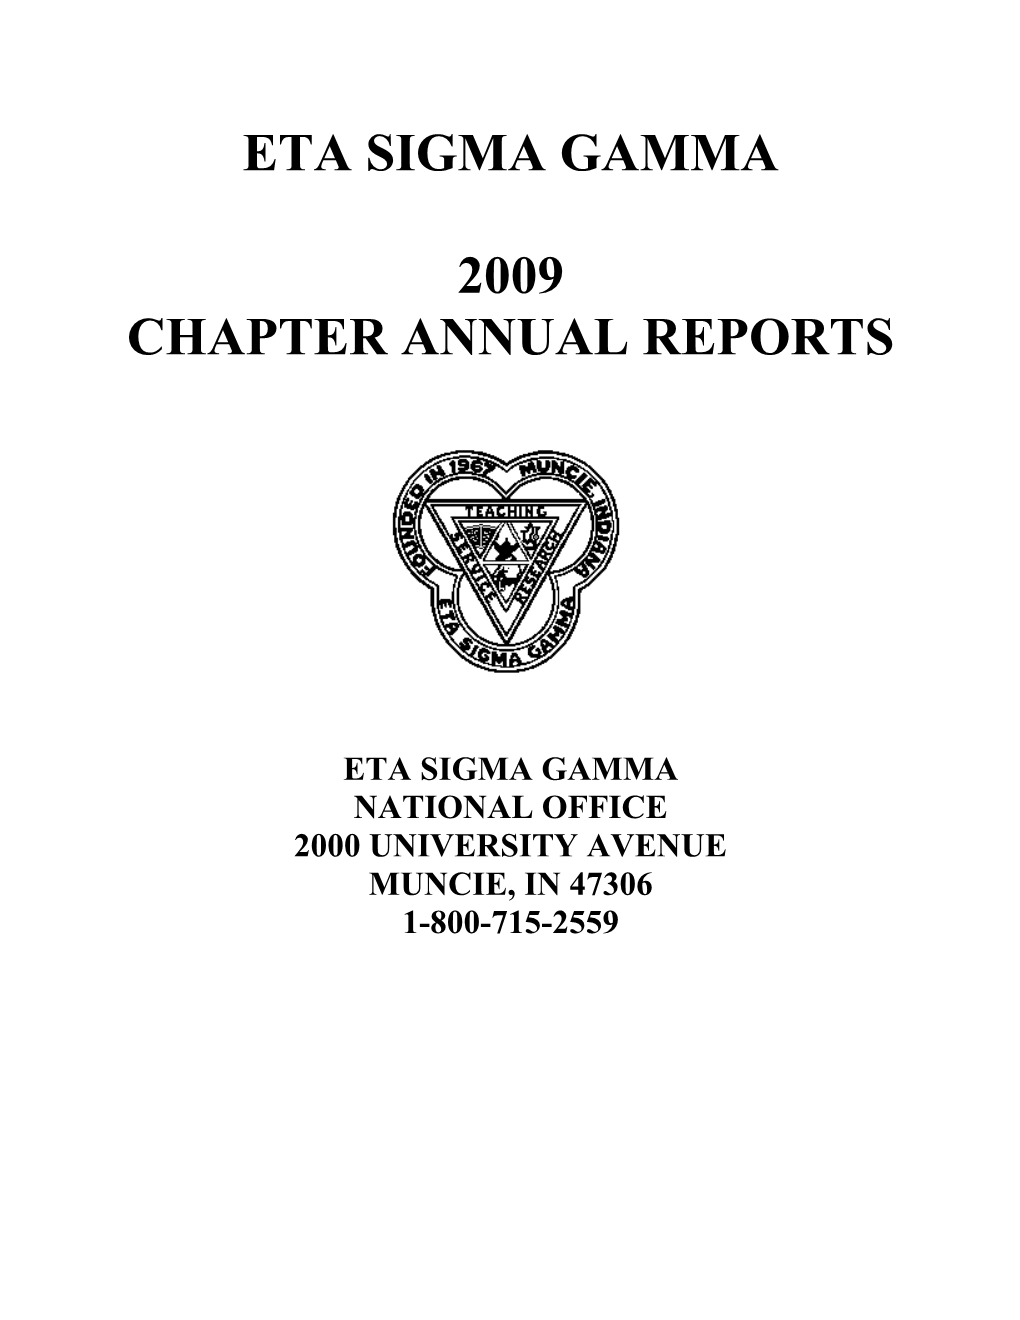 Eta Sigma Gamma 2009 Chapter Annual Reports